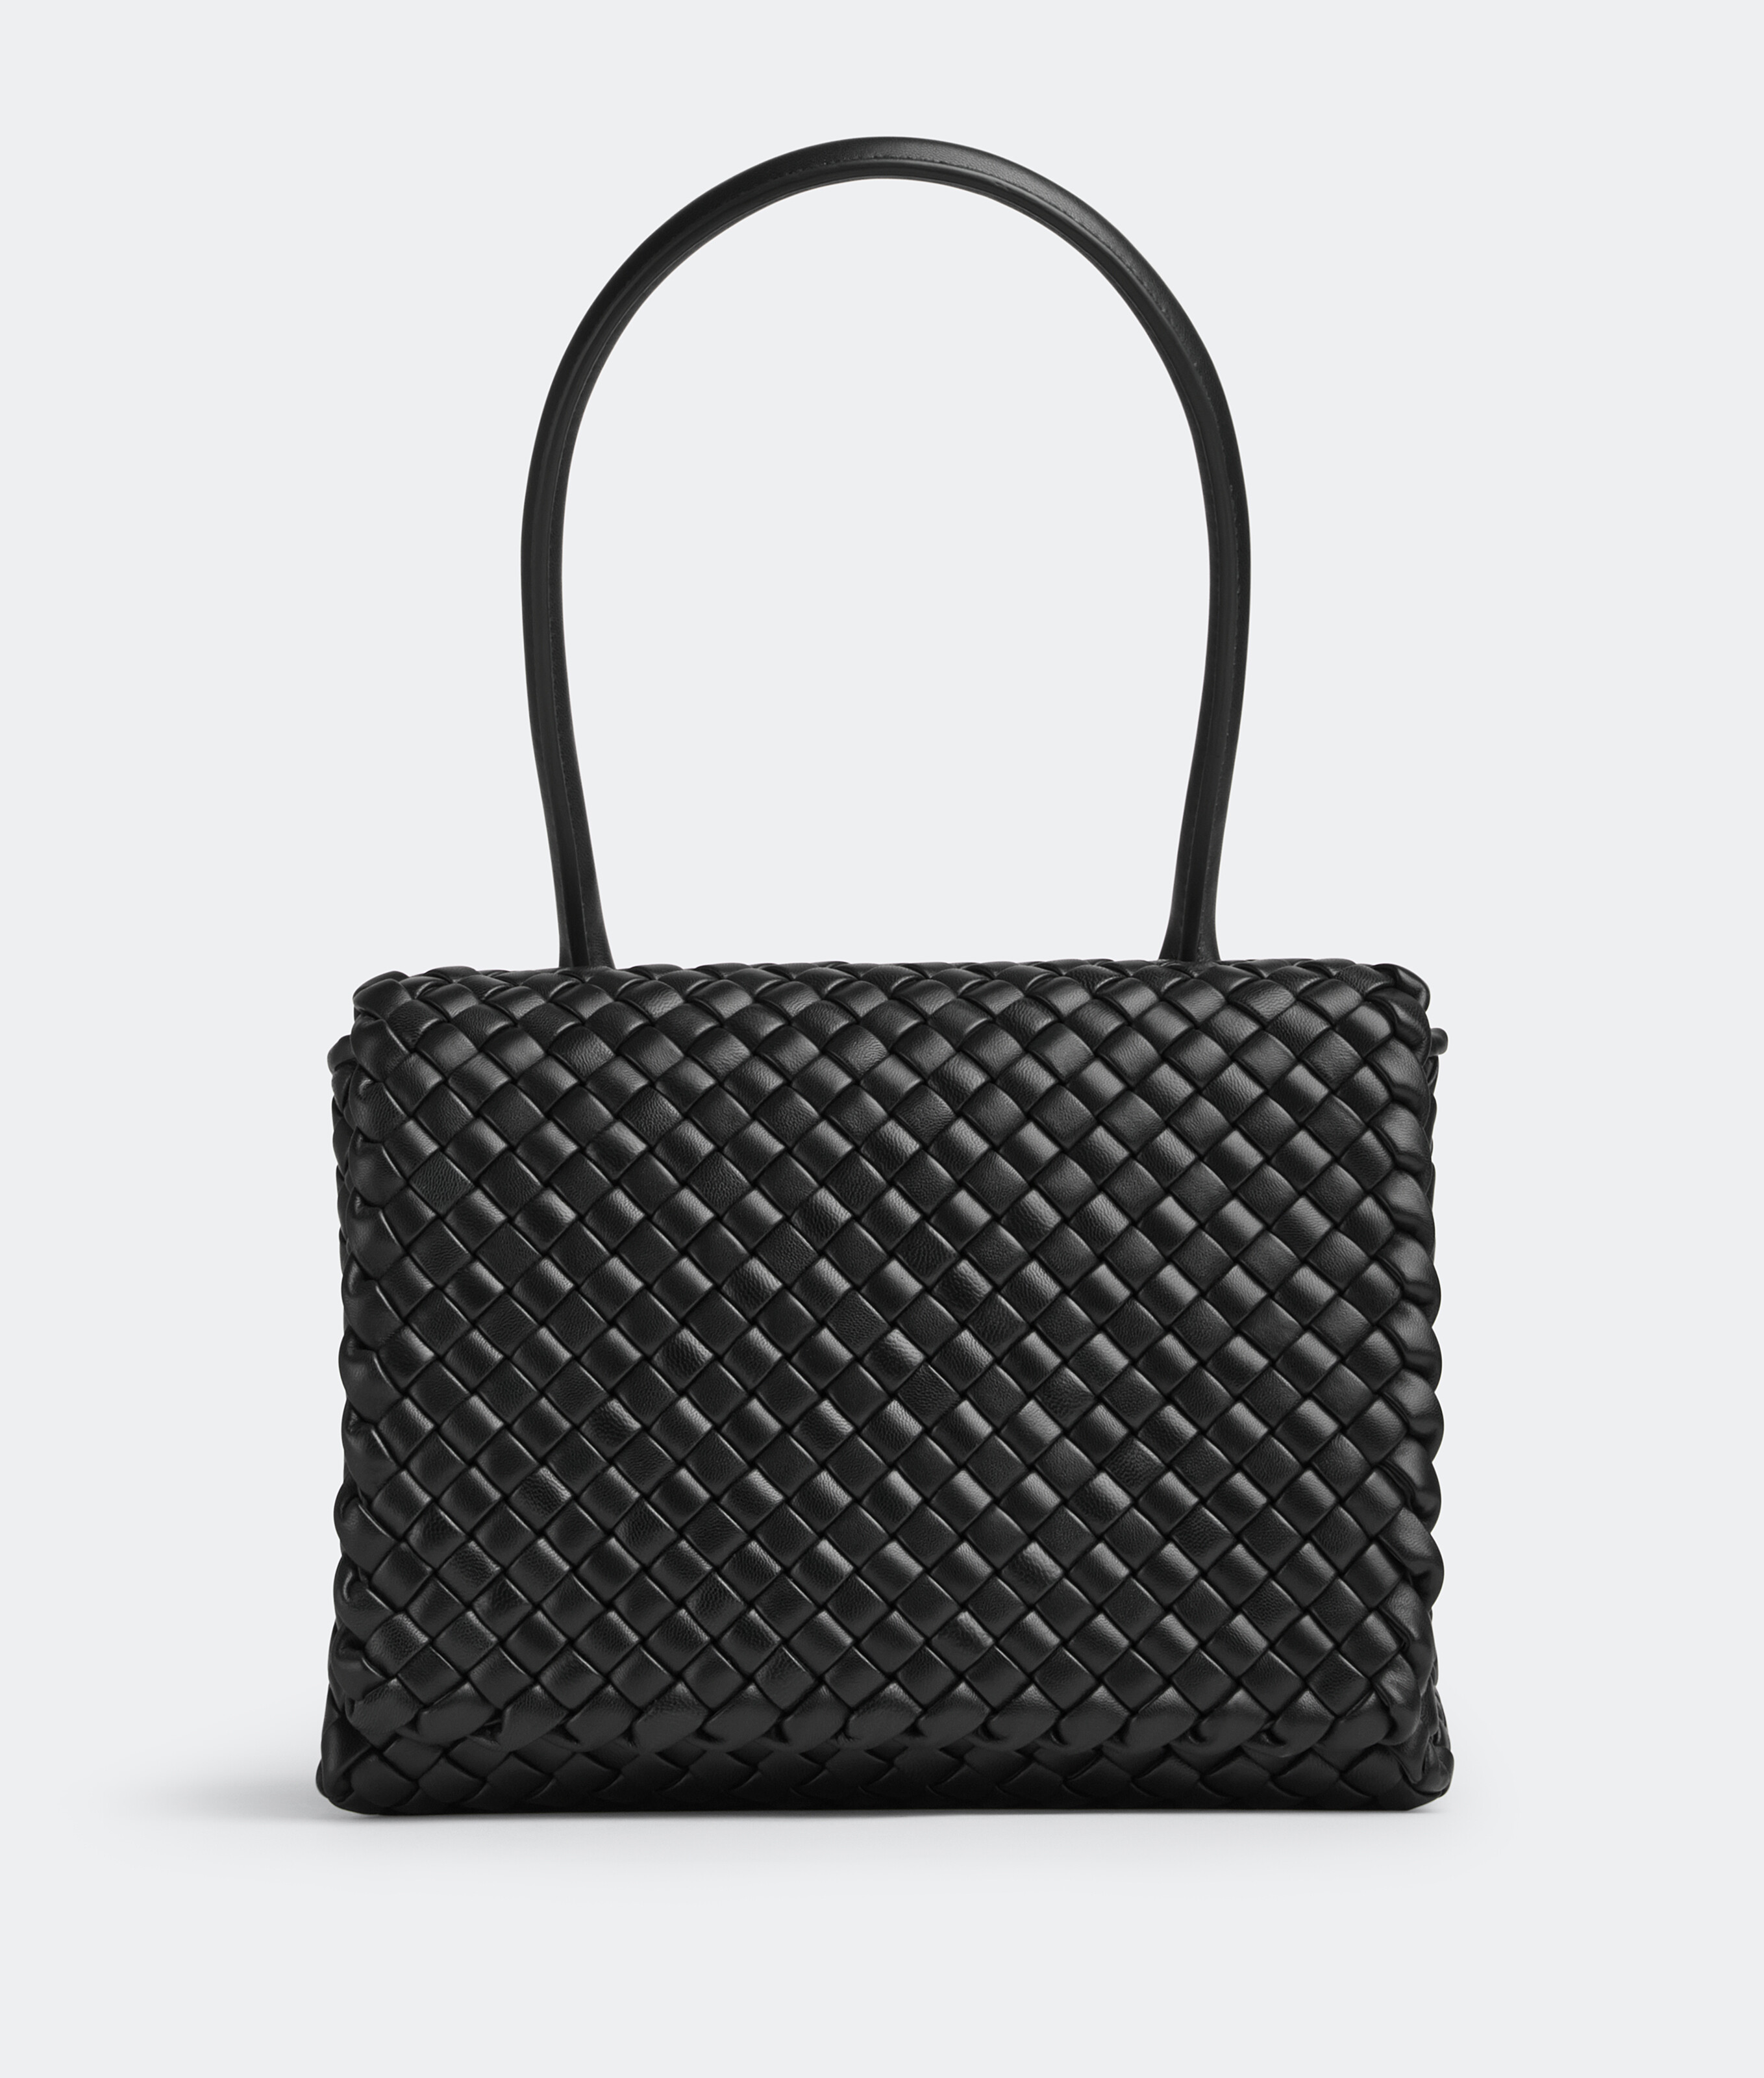 Bottega Veneta® Patti Top Handle Bag in Black. Shop online now.